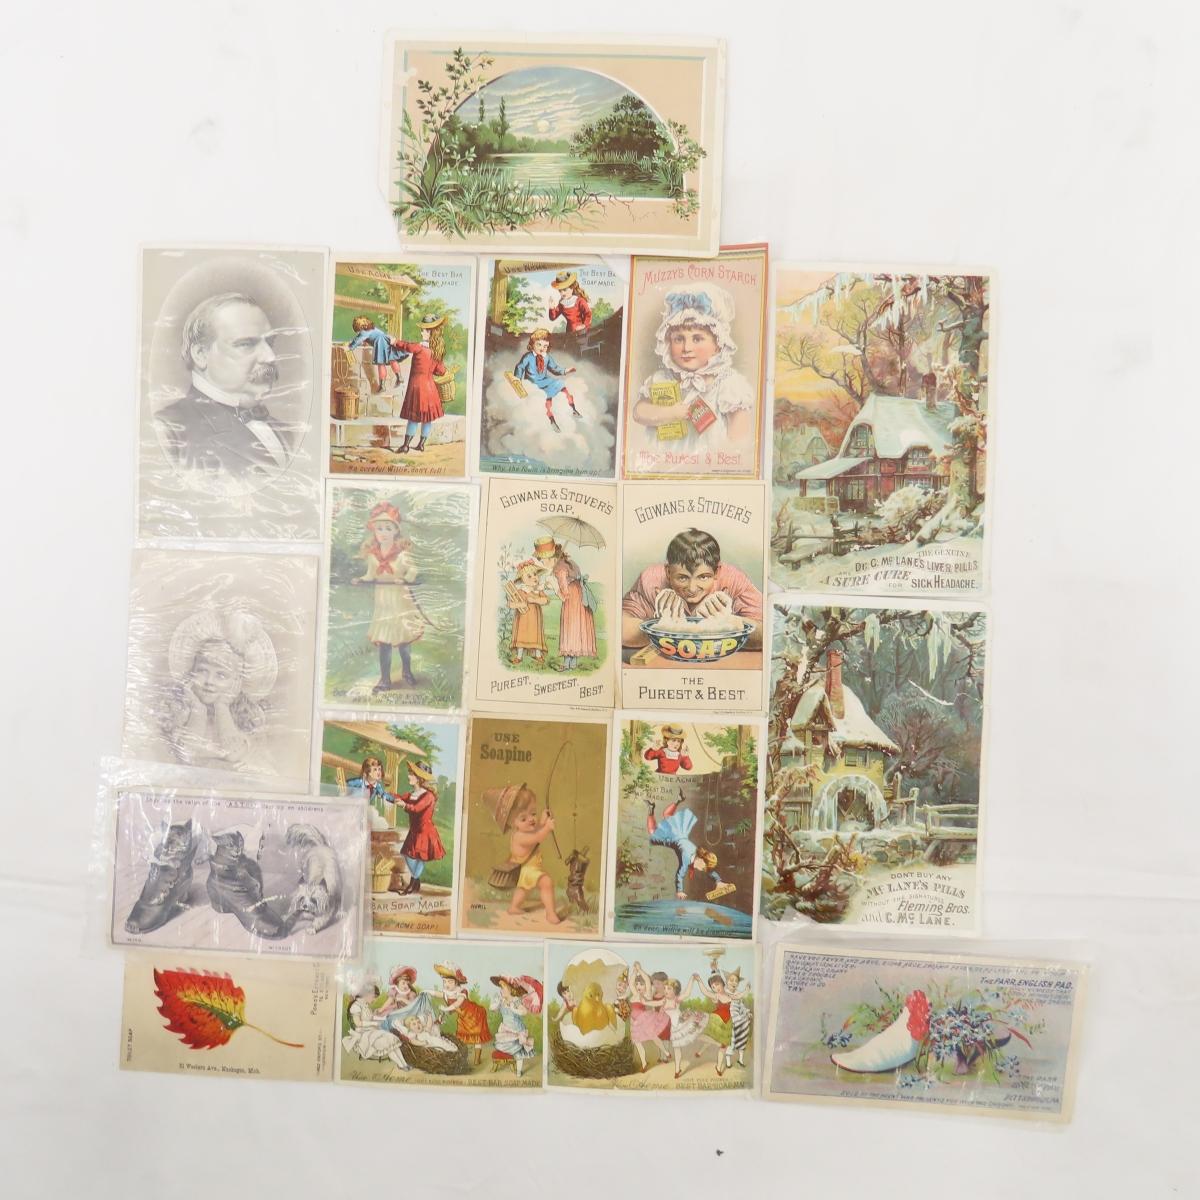 Antique Trade Cards, Tobacco Cards and Ephemera